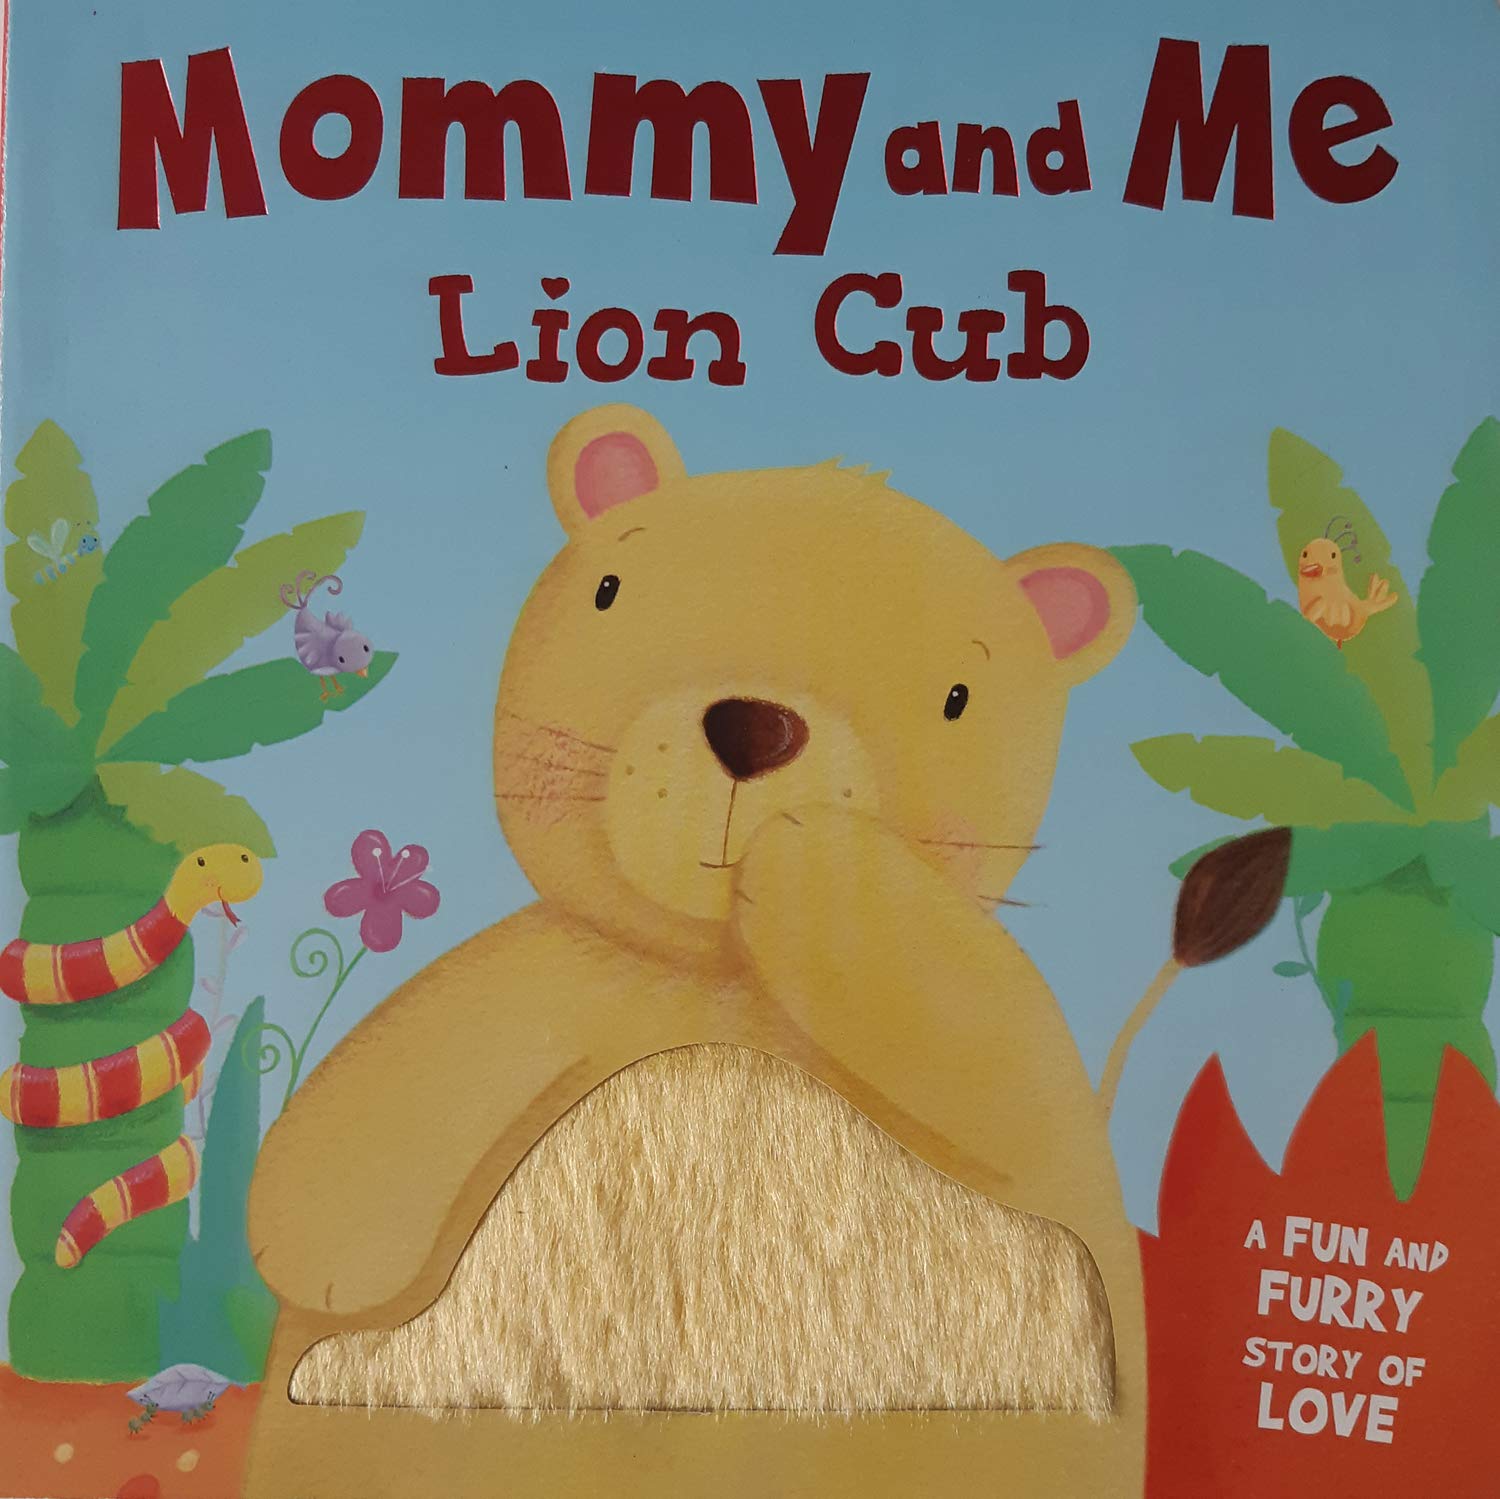 IMG : Mummy and Me Lion Cub